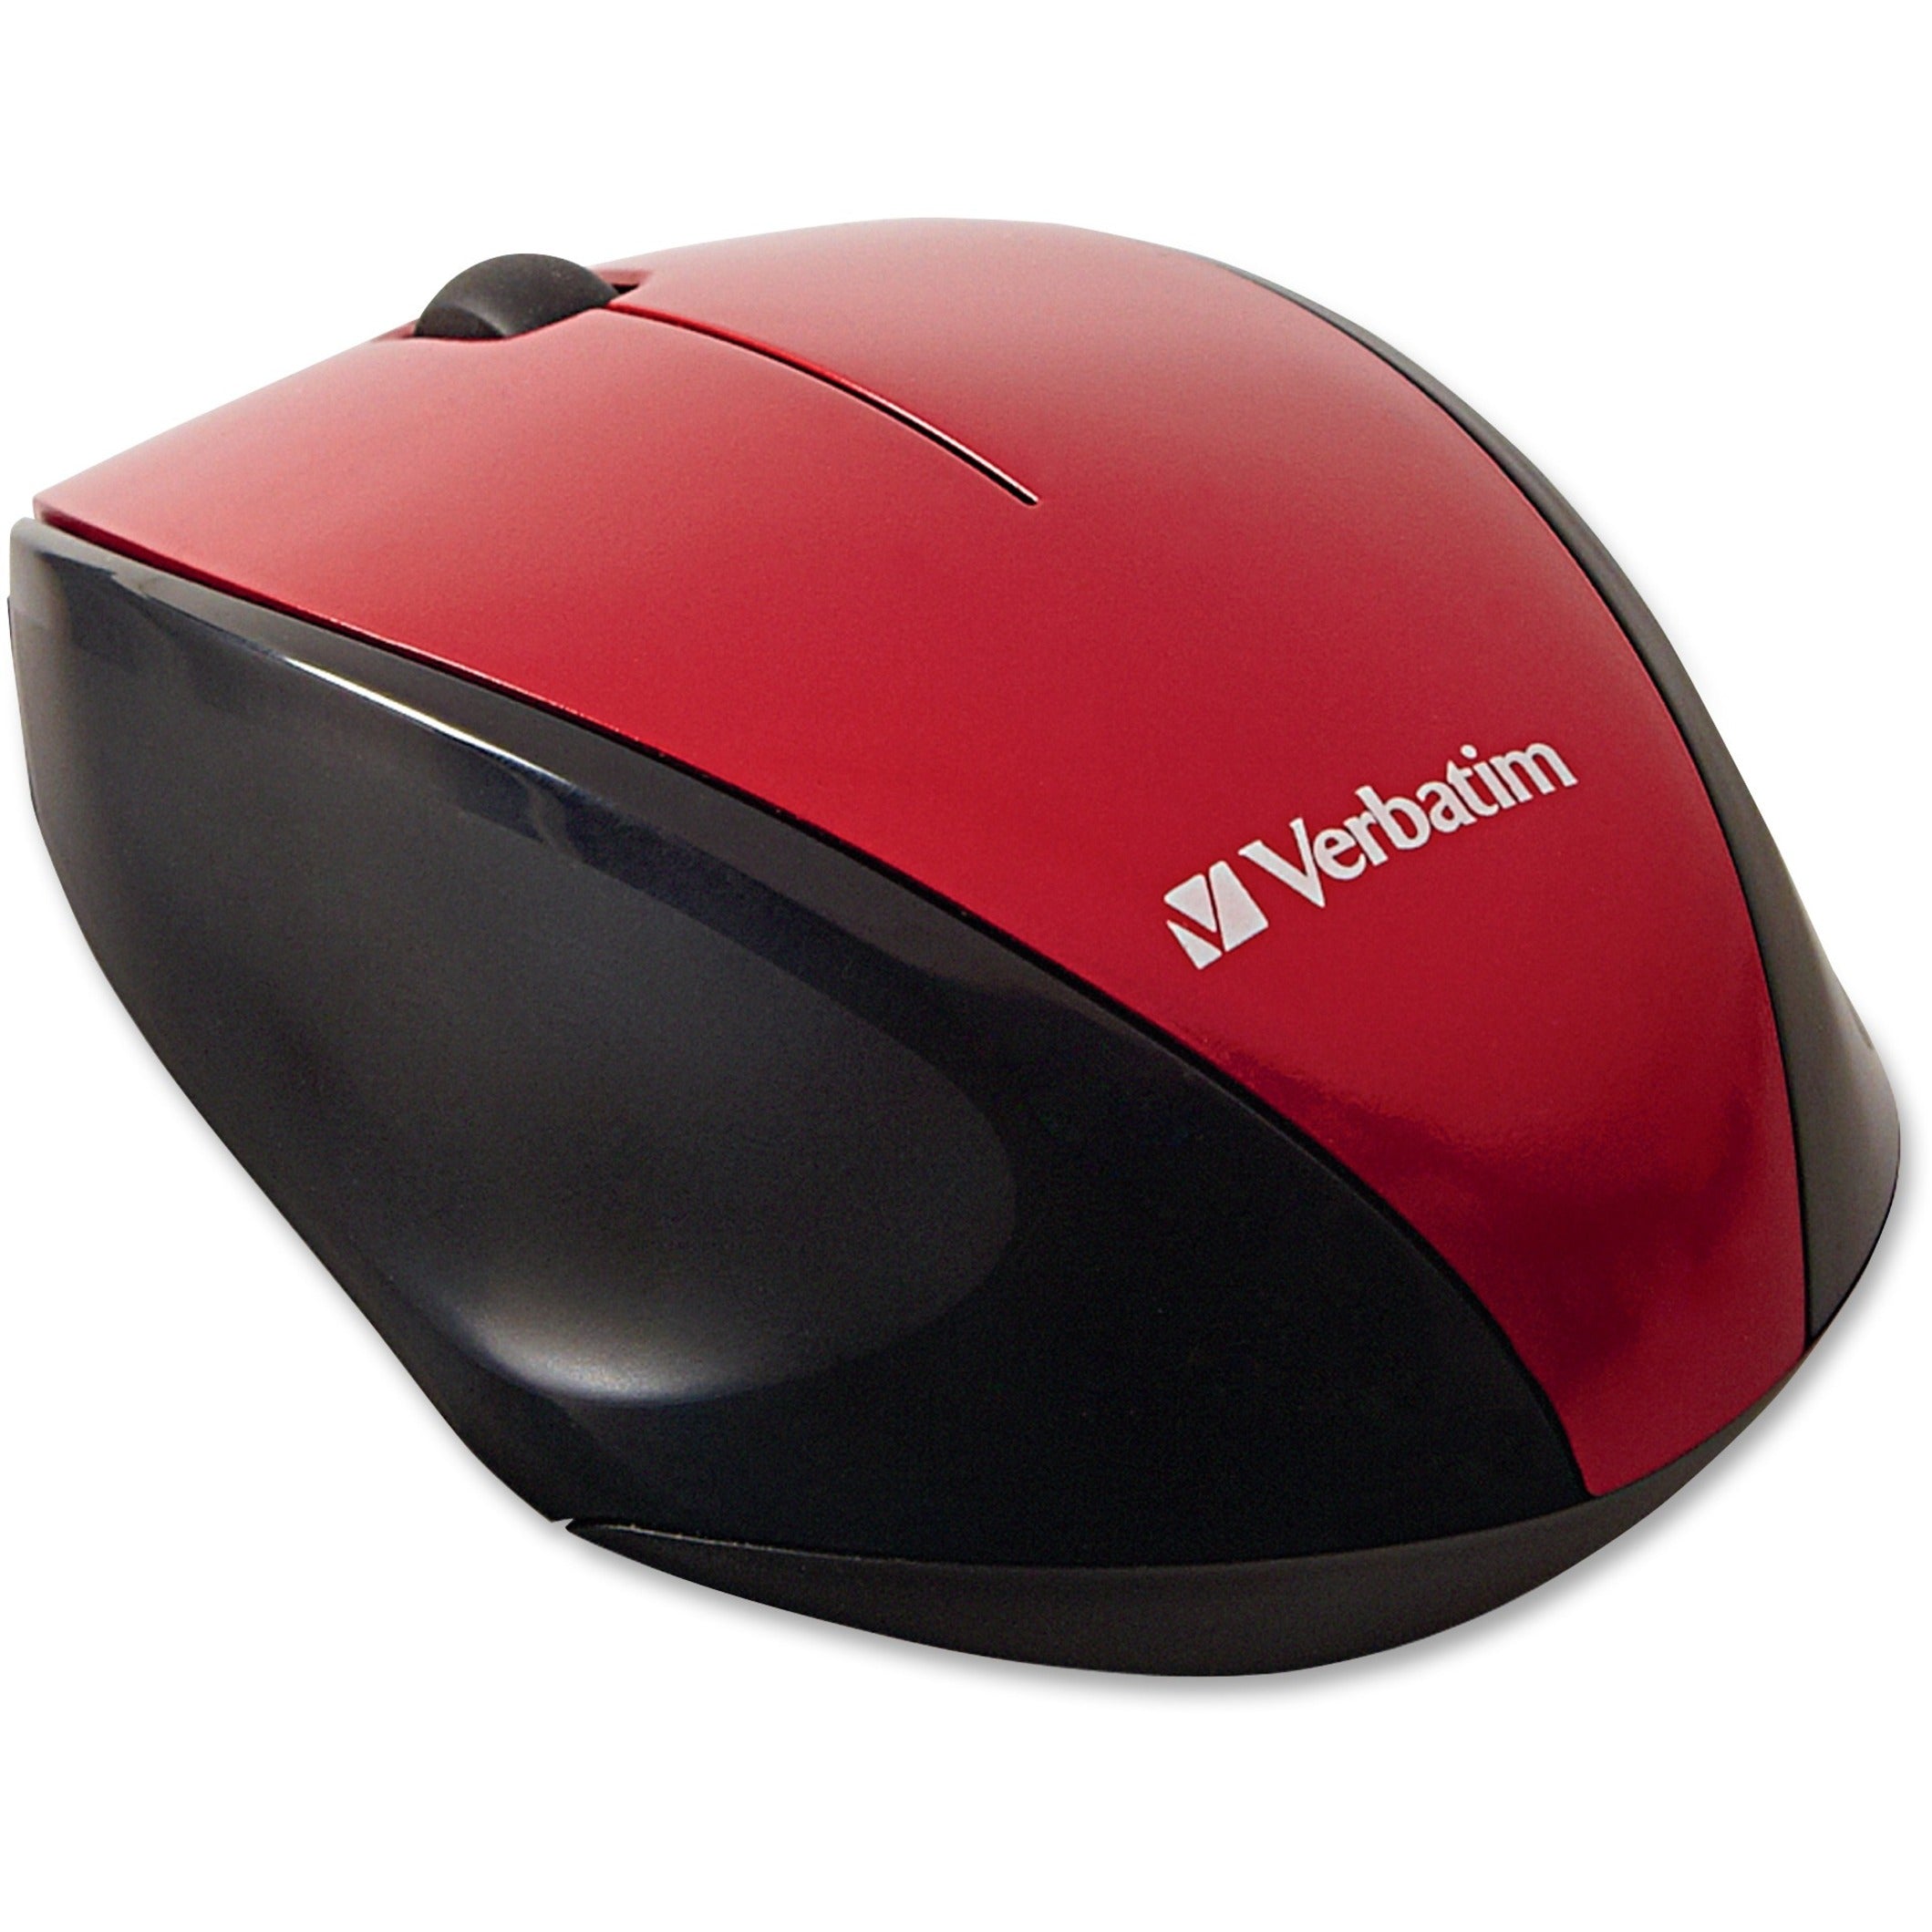 Verbatim 97995 Wireless Multi-trac LED Optical Mouse, Red - Comfort Grip, Ergonomic, Contour